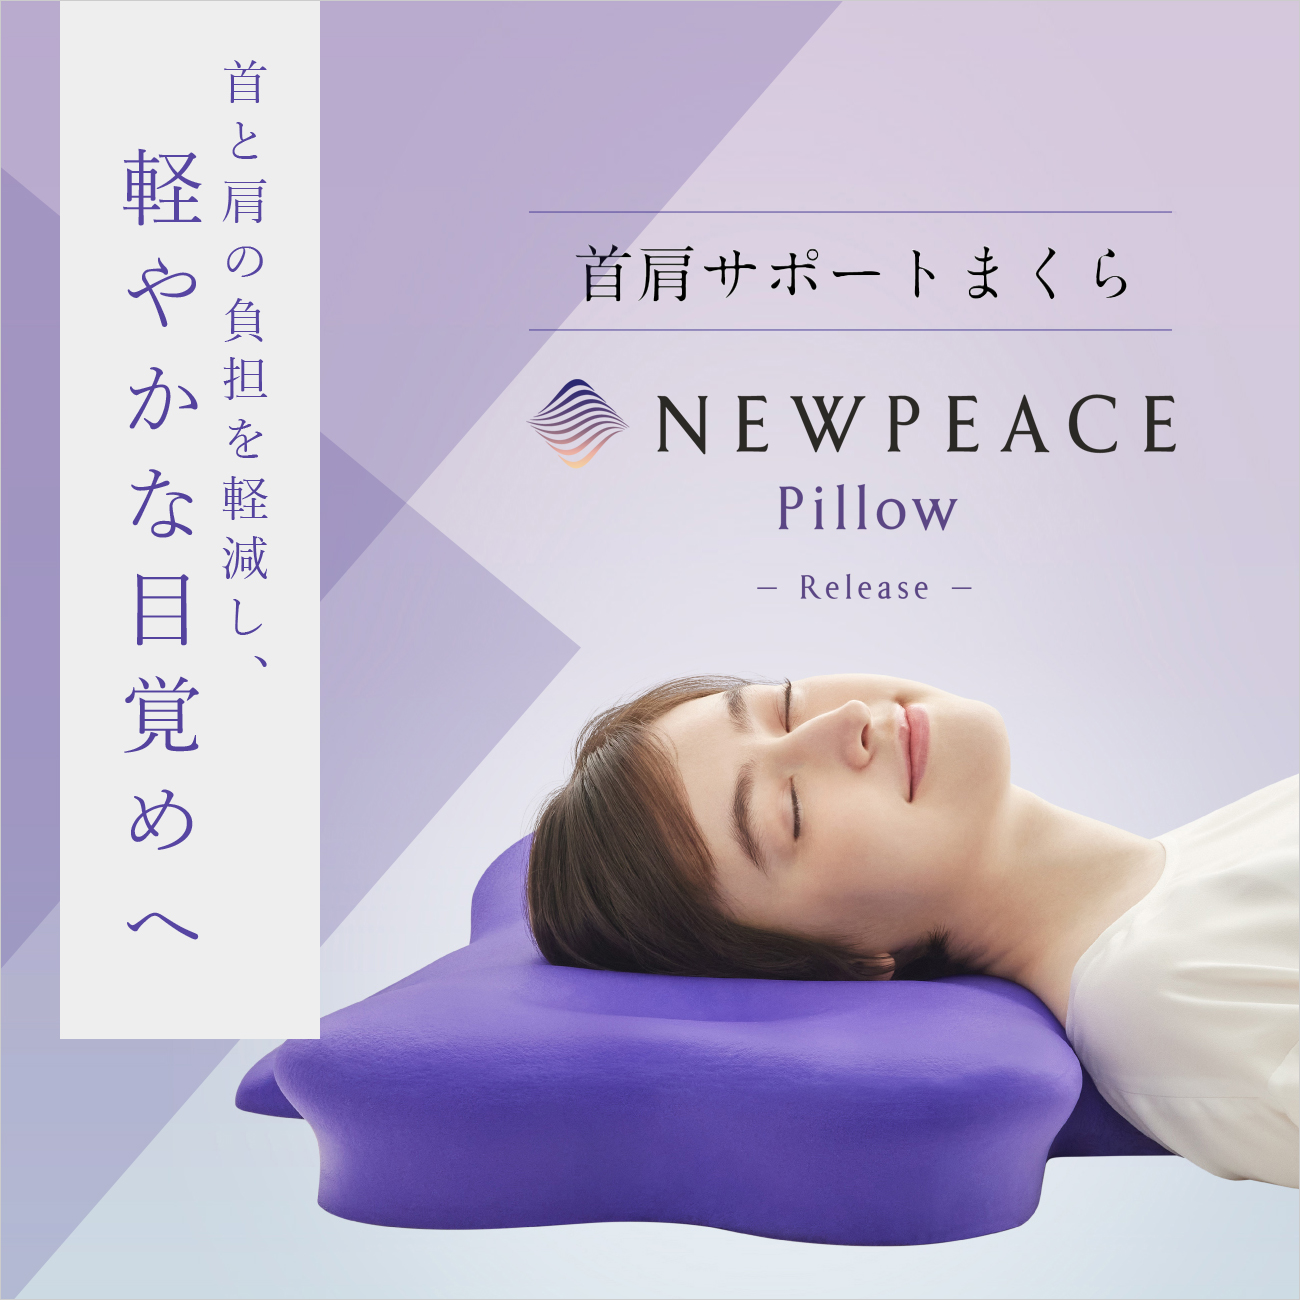 【特集】NEWPEACE Pillow- Release-